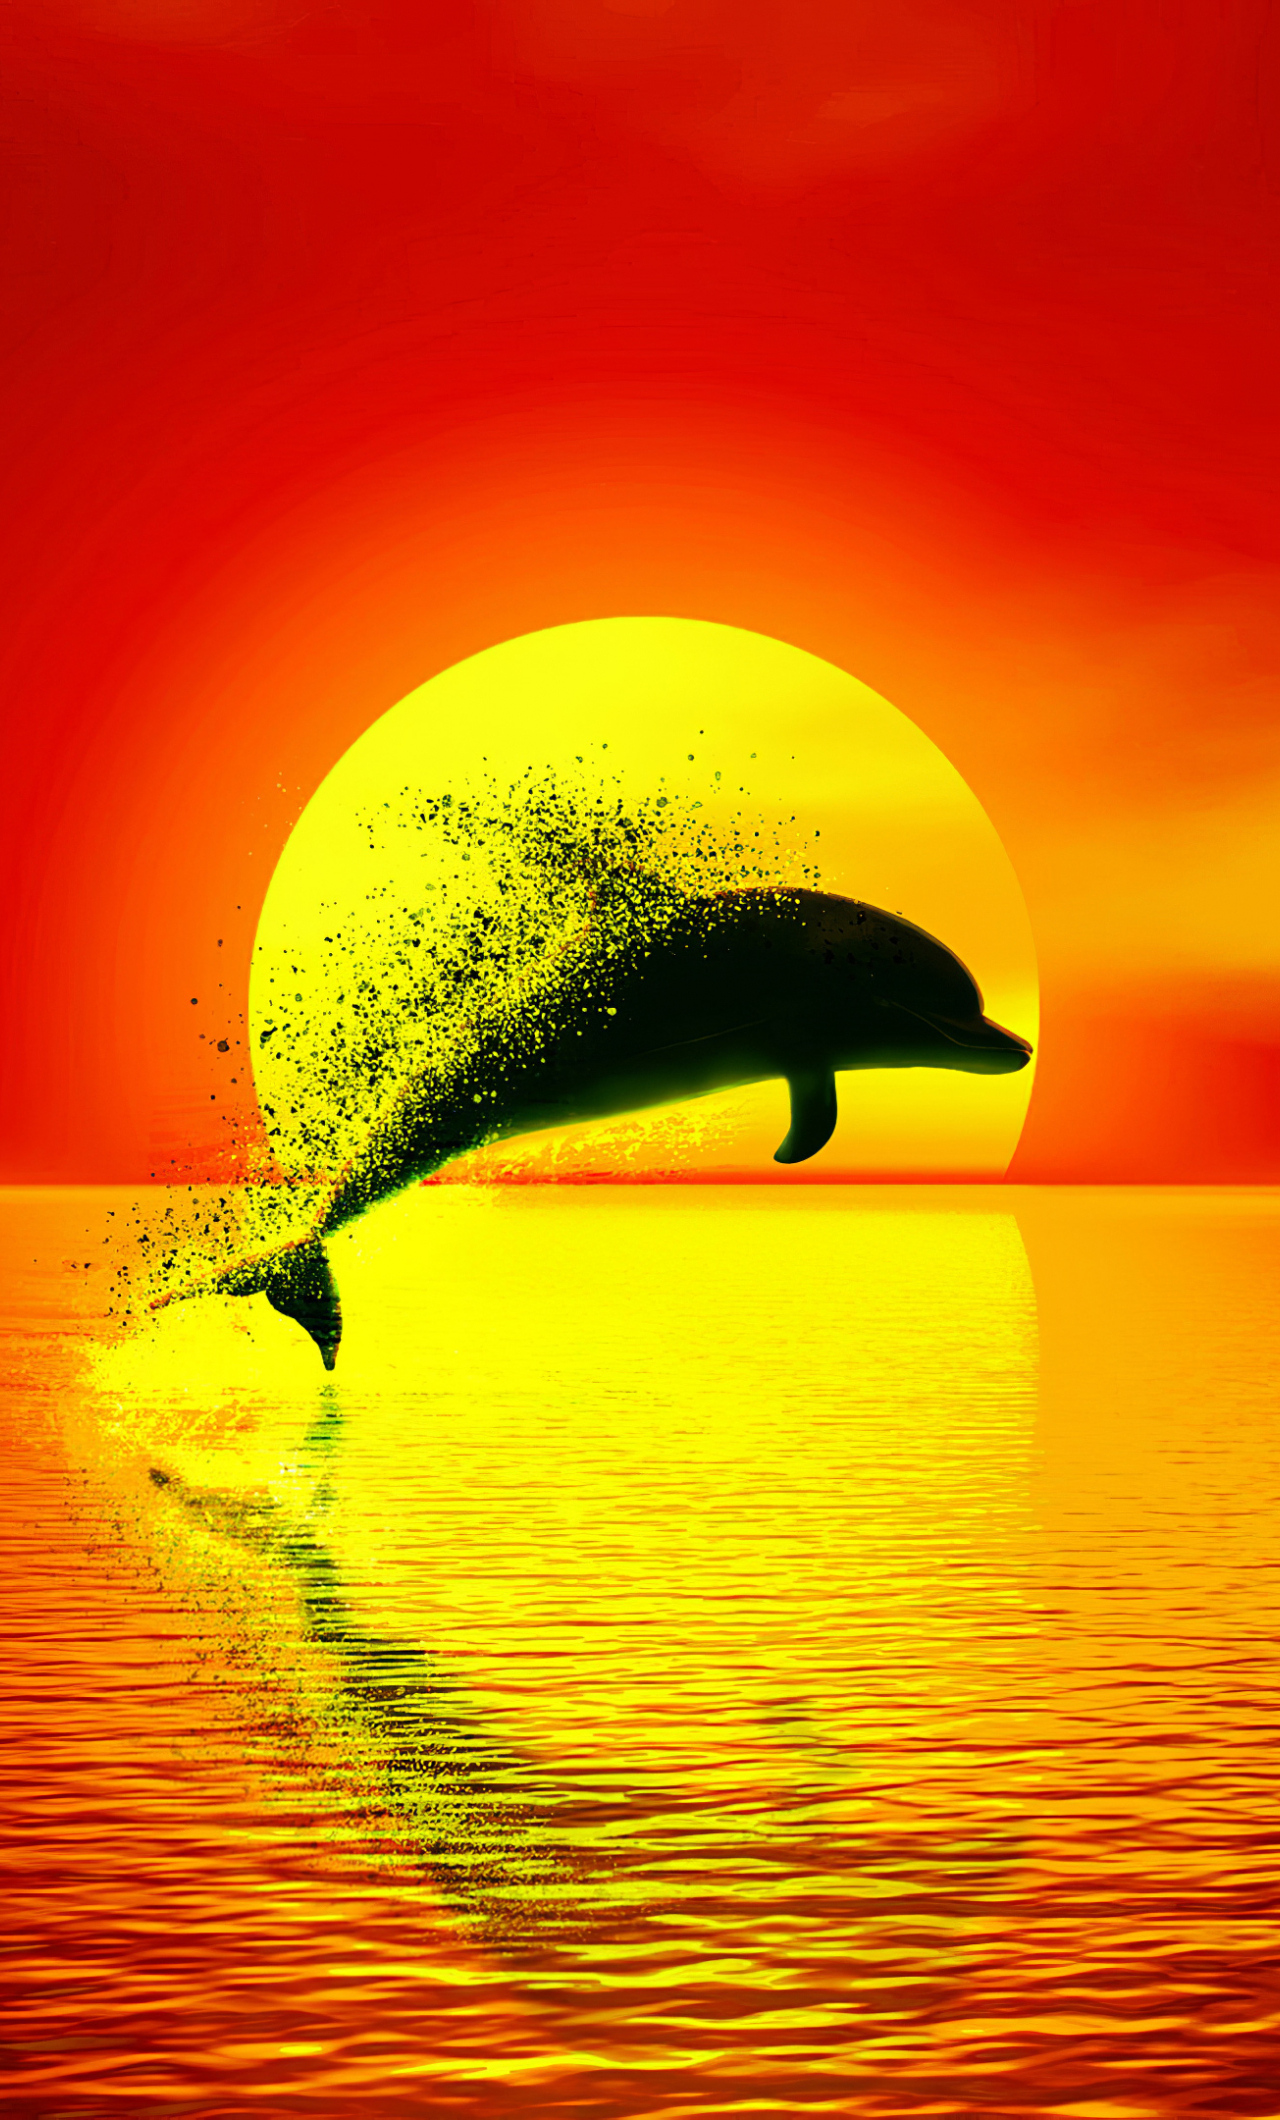 wallpaper iphone x  Dolphin art Ocean animals Underwater painting